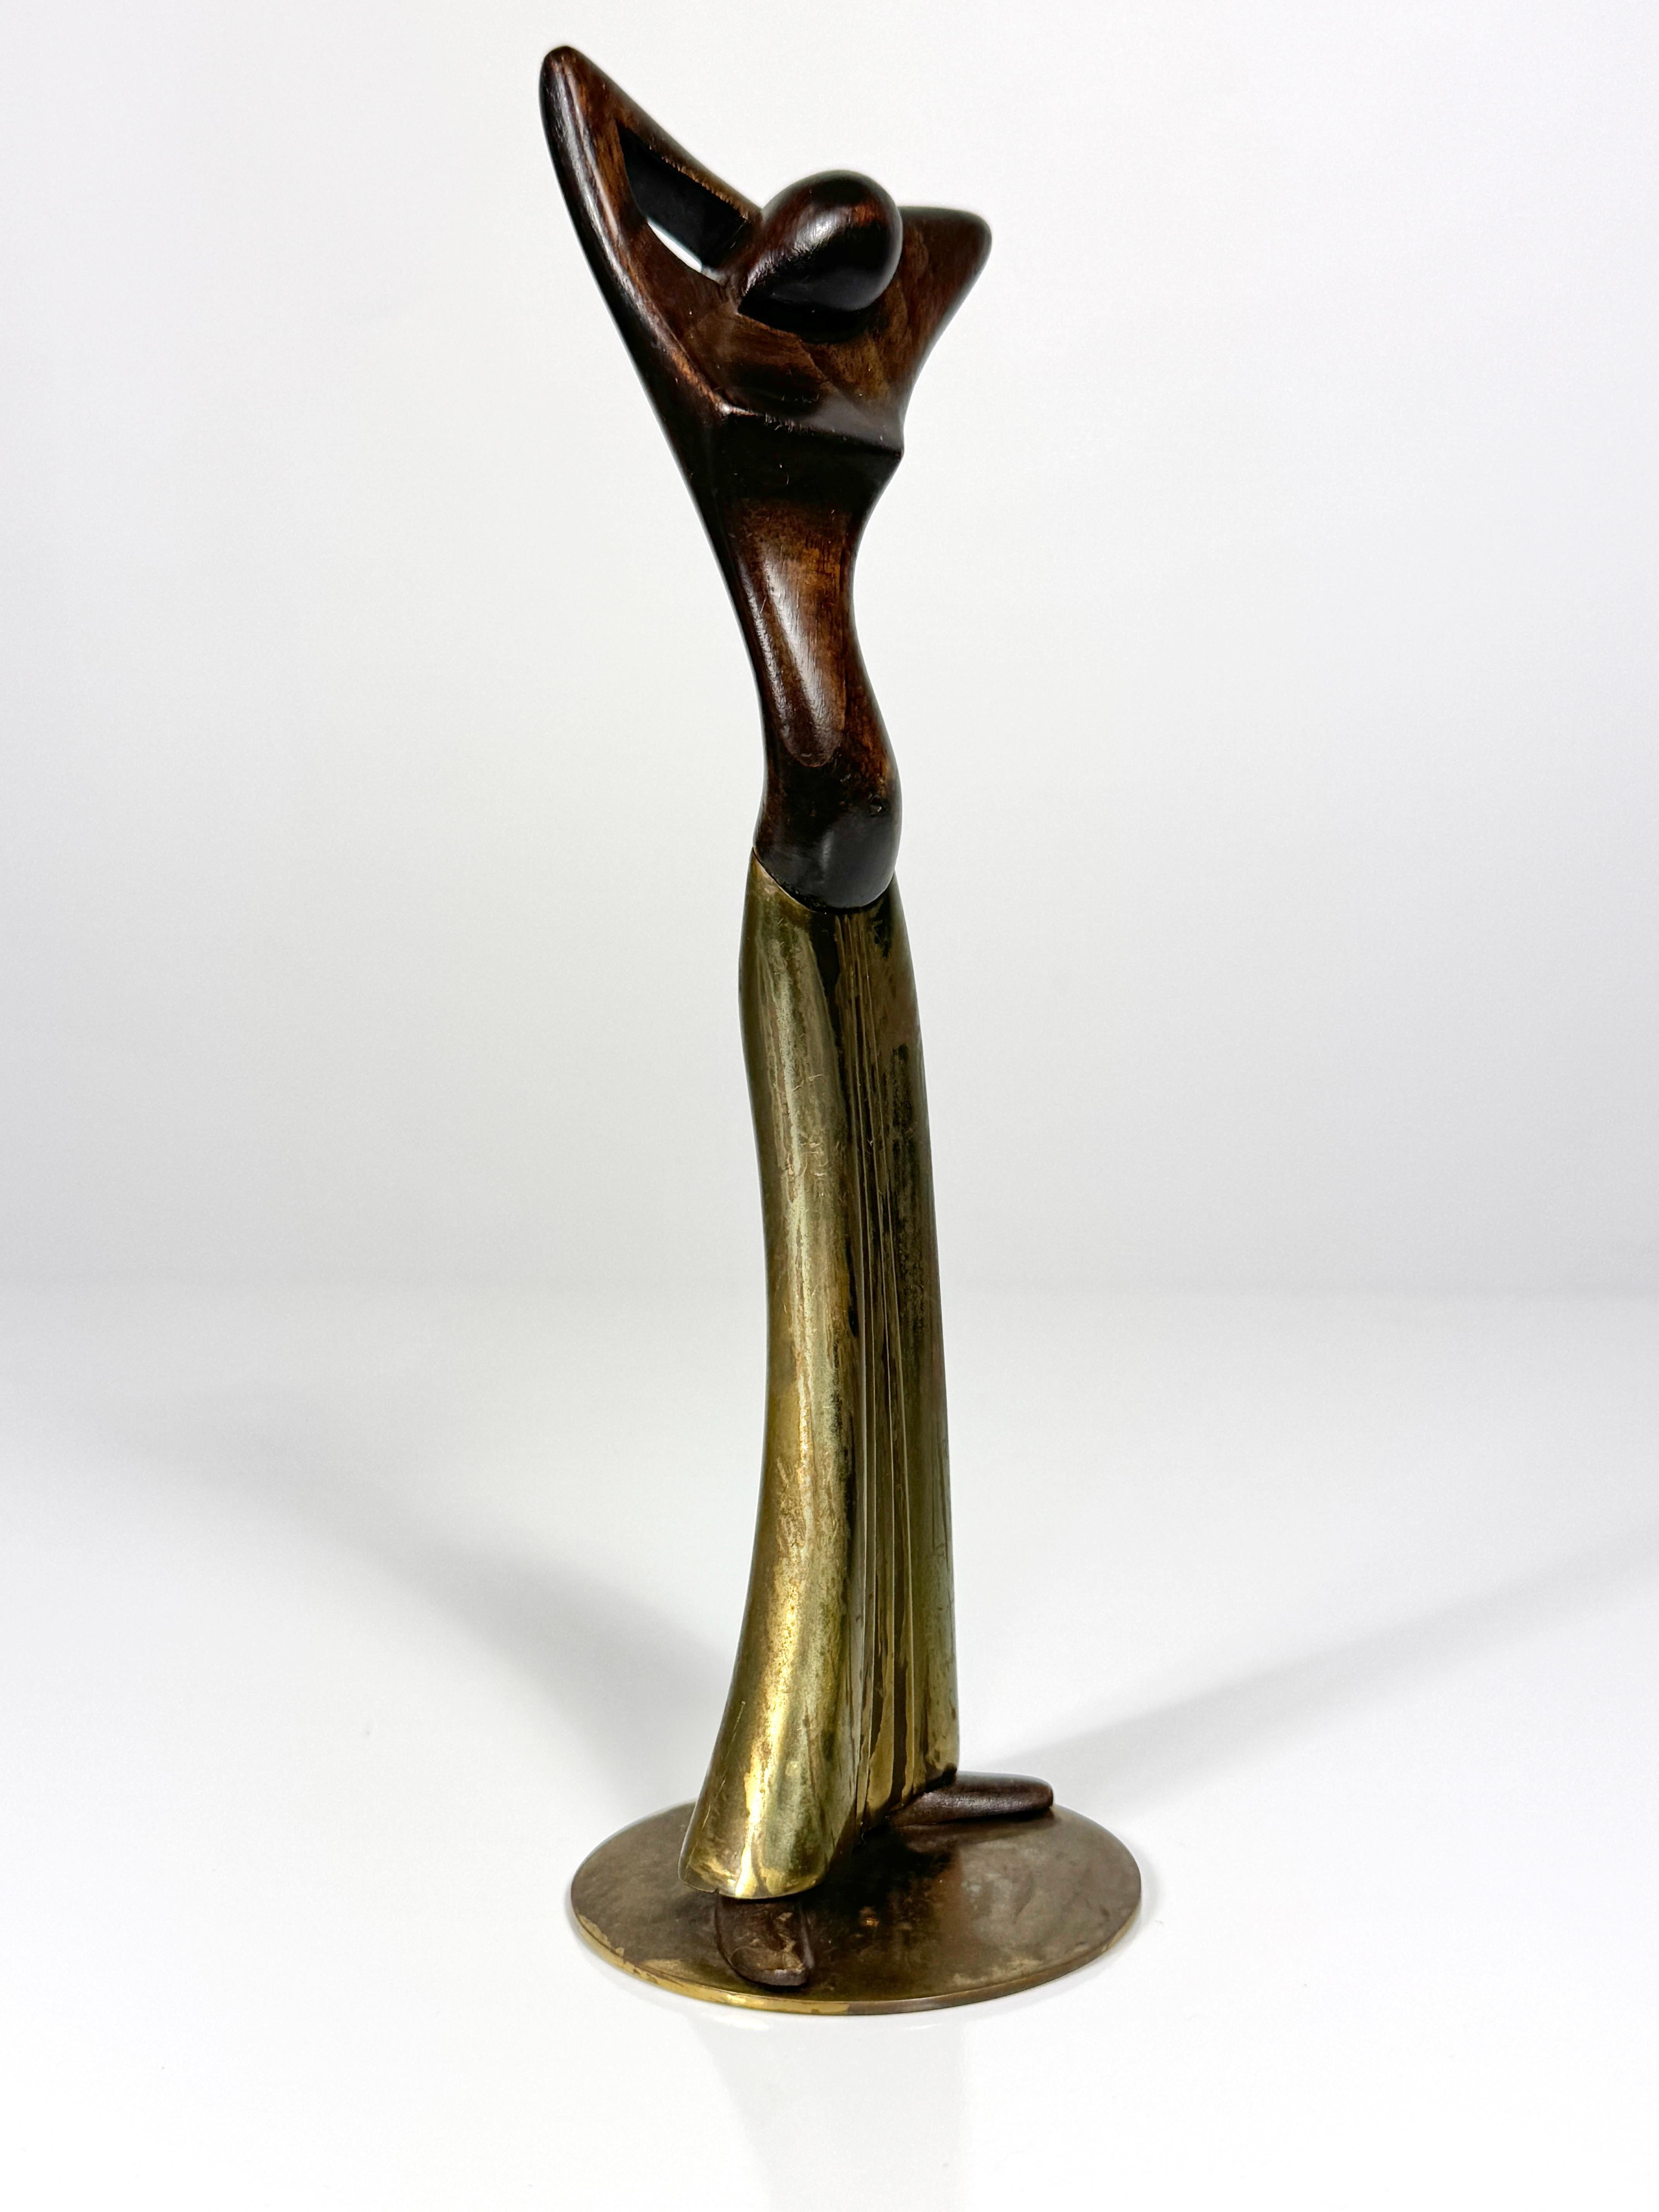 Art Deco Brass & Wood Figural Female Sculpture by Hagenauer Wien Austria 1930s For Sale 2